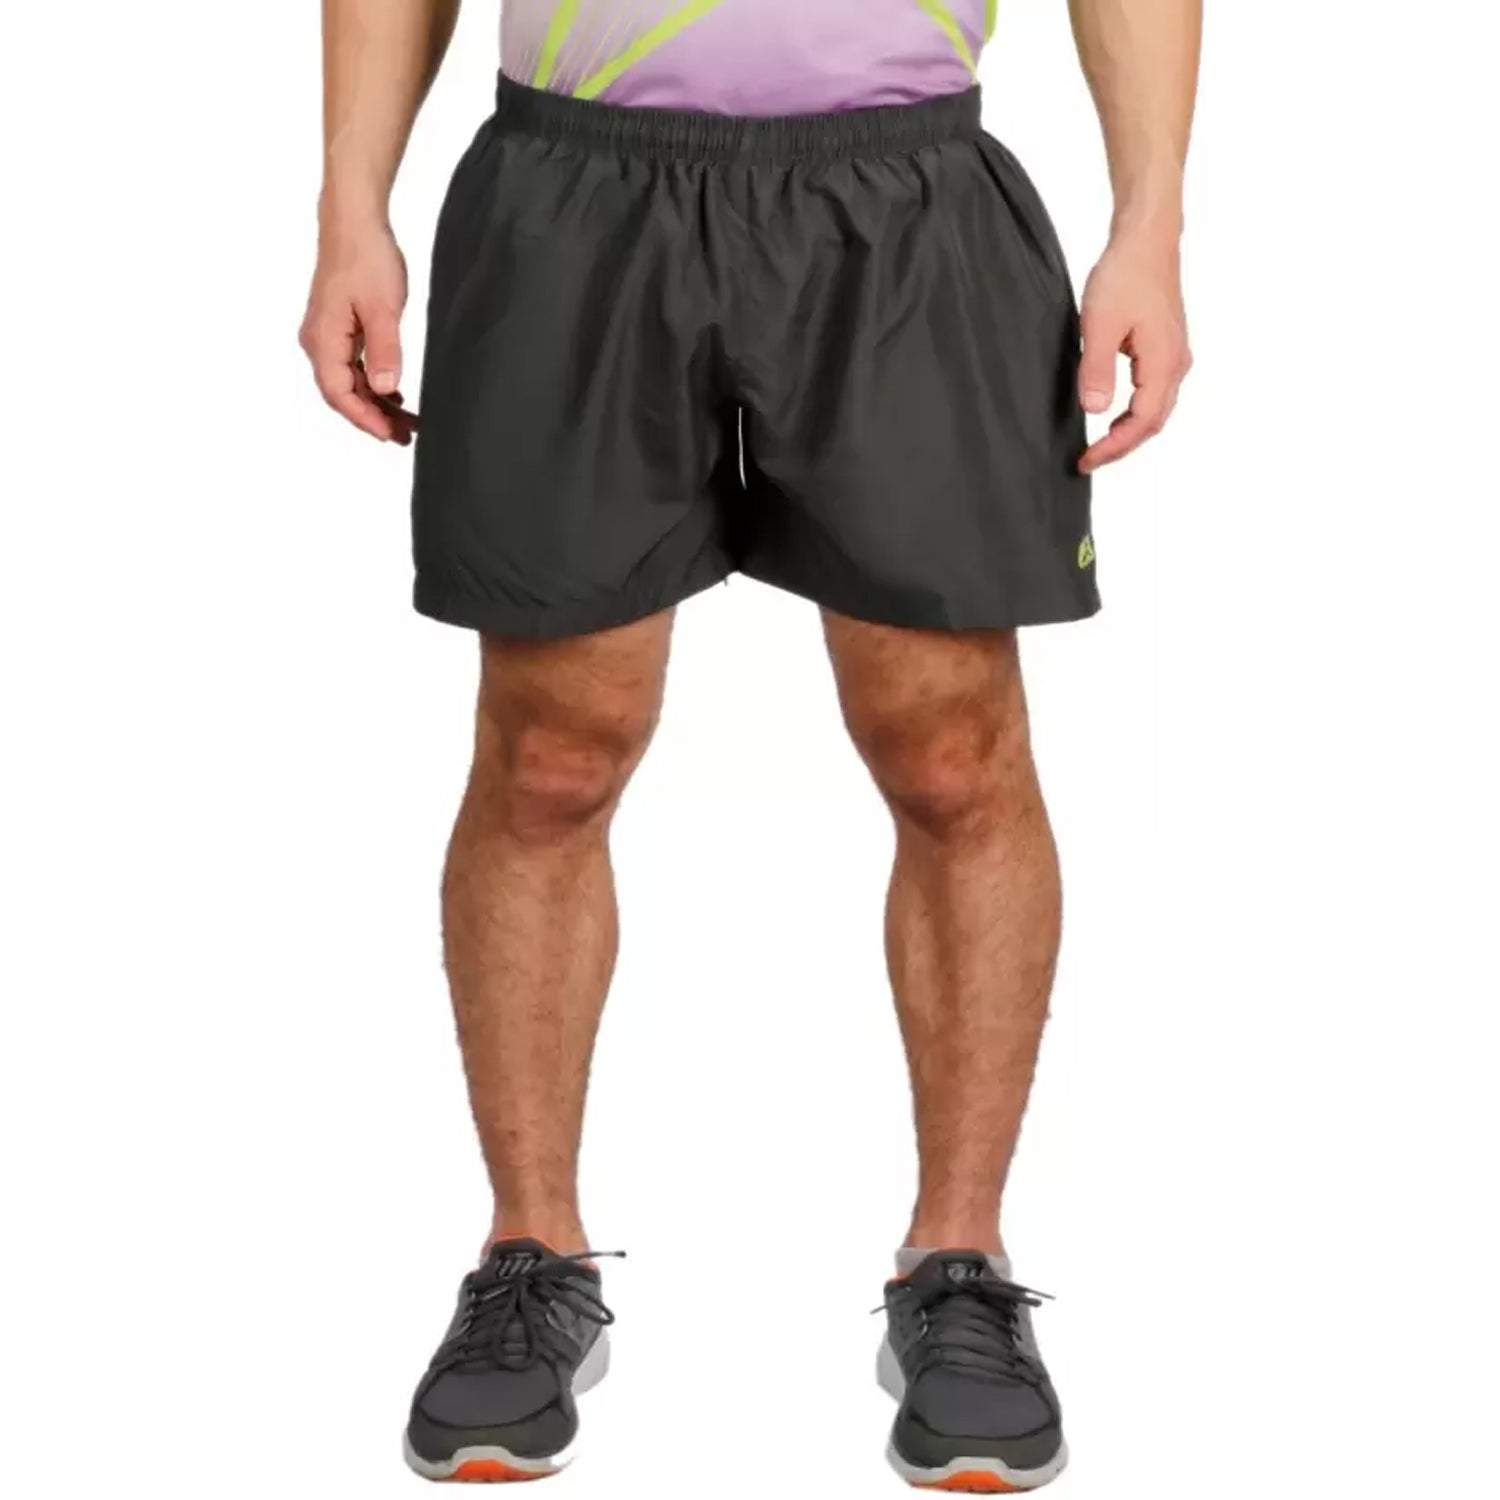 Vector X VS-600 Men's Sports Shorts, Grey - Best Price online Prokicksports.com